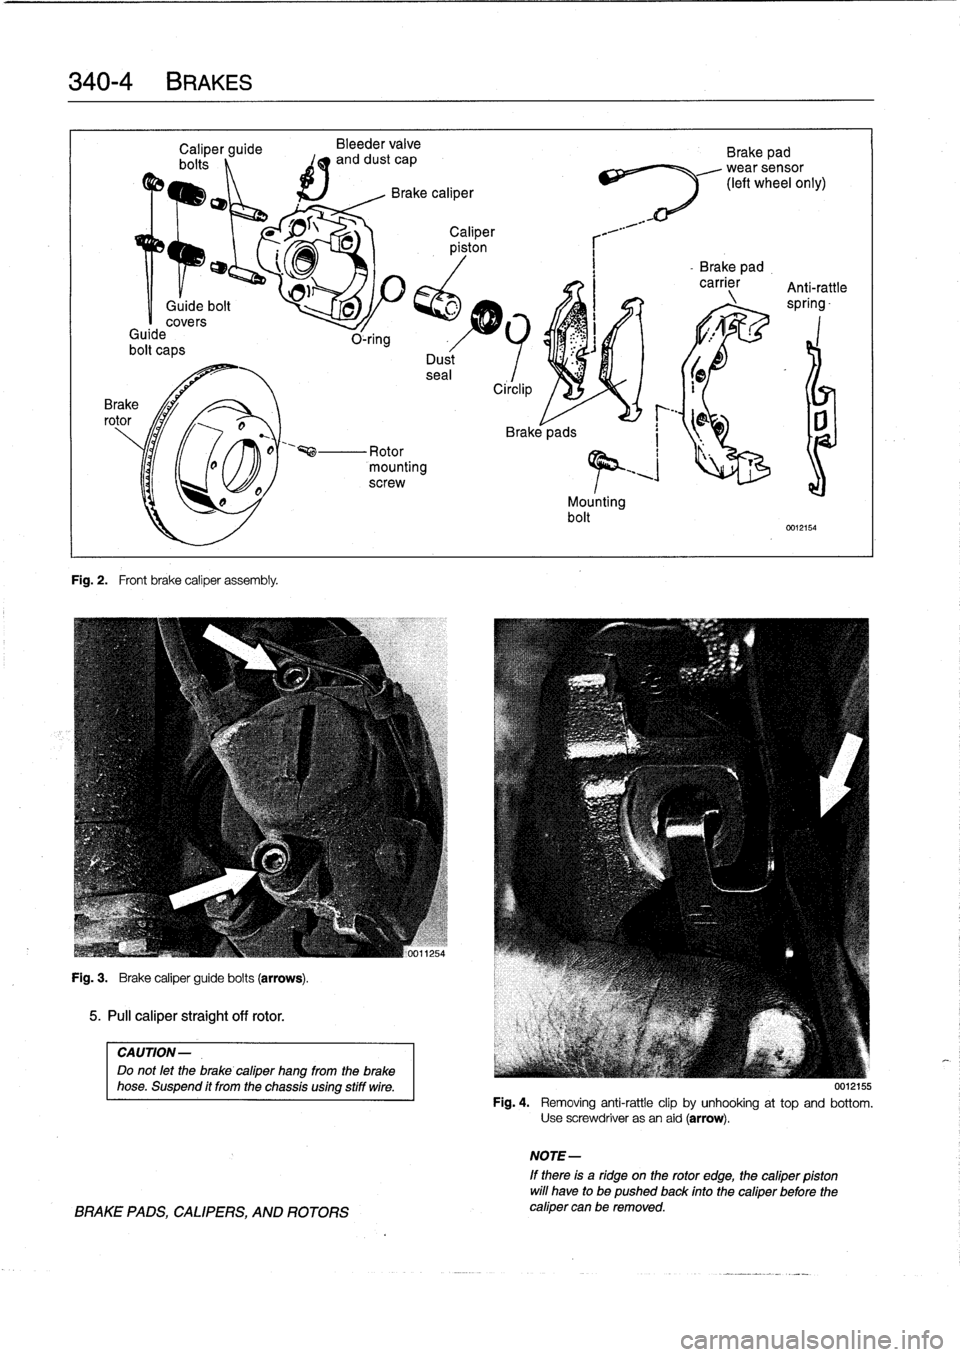 BMW 318i 1998 E36 Workshop Manual 
340-
4
BRAKES

Fig
.
2
.

	

Front
brake
caliper
assembly
.

Bleeder
valve
and
dust
cap

Mounting
bolt

Brake
pad
wearsensor
(left
wheel
only)

-
Brake
pad
.
carrier
Anti-rattle
^_
spring-

0012154

